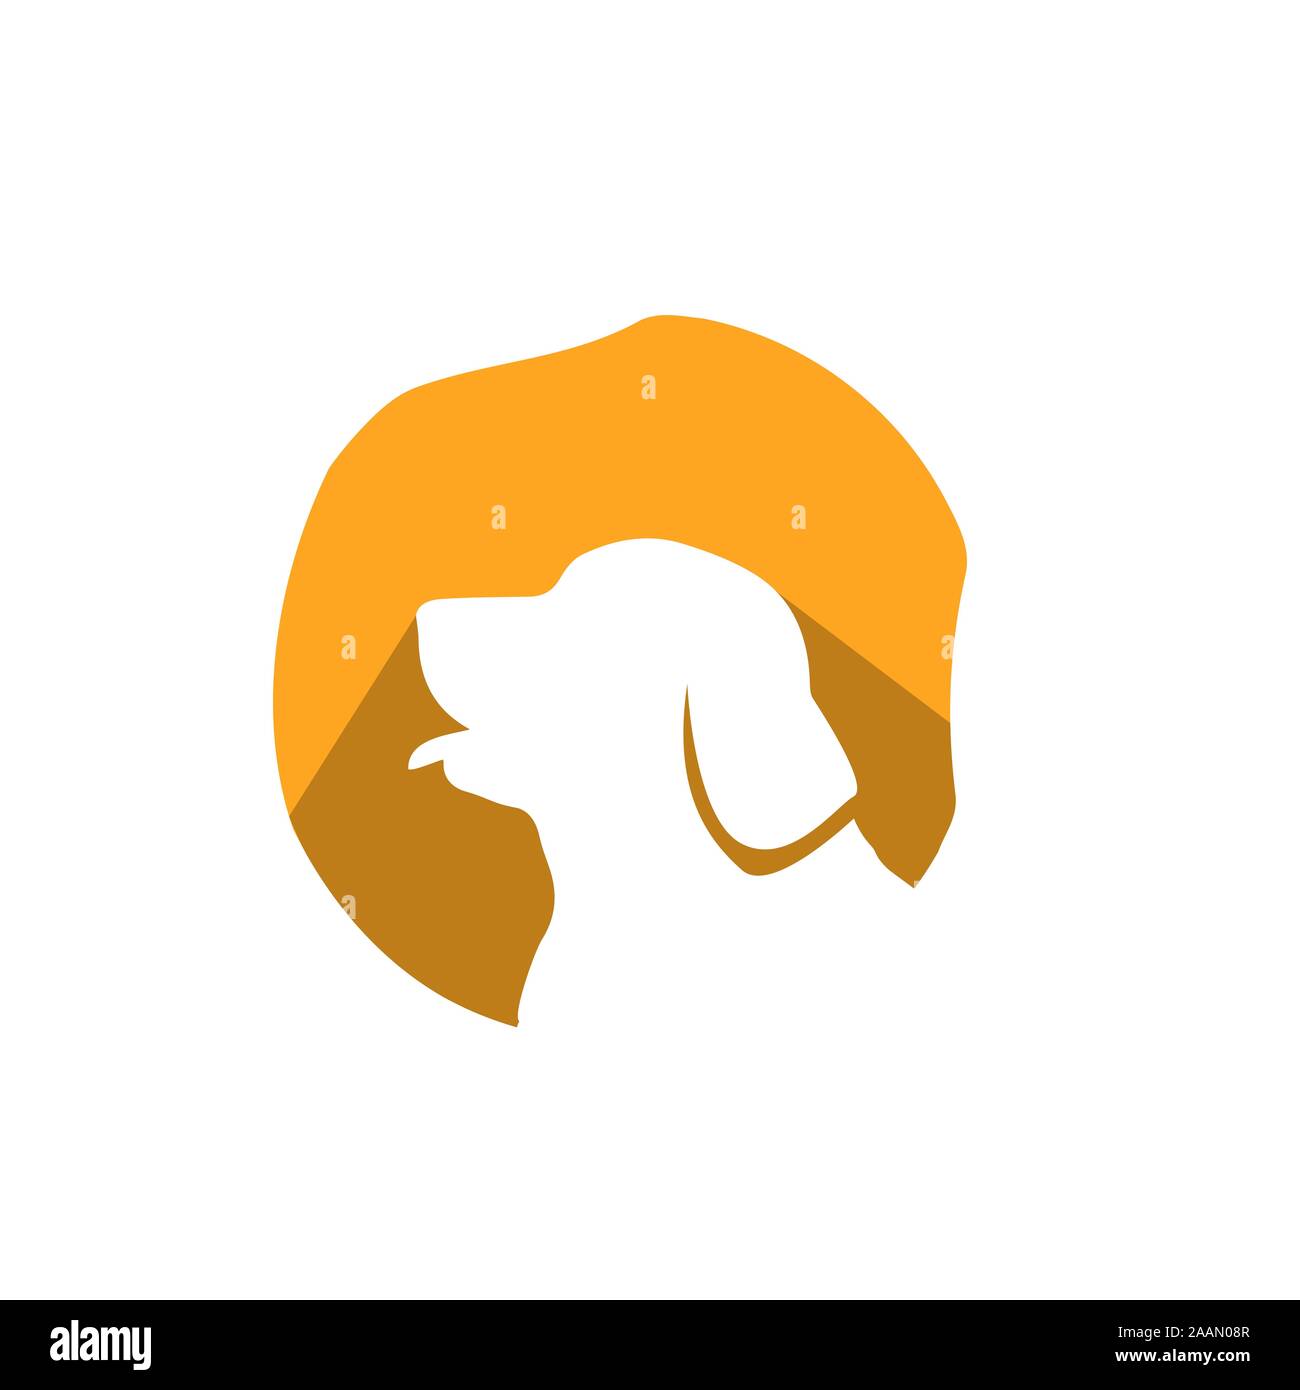 silhouette of golden retriever dog logo vector. stylish golden retriever letter with dog head element design concept Stock Vector